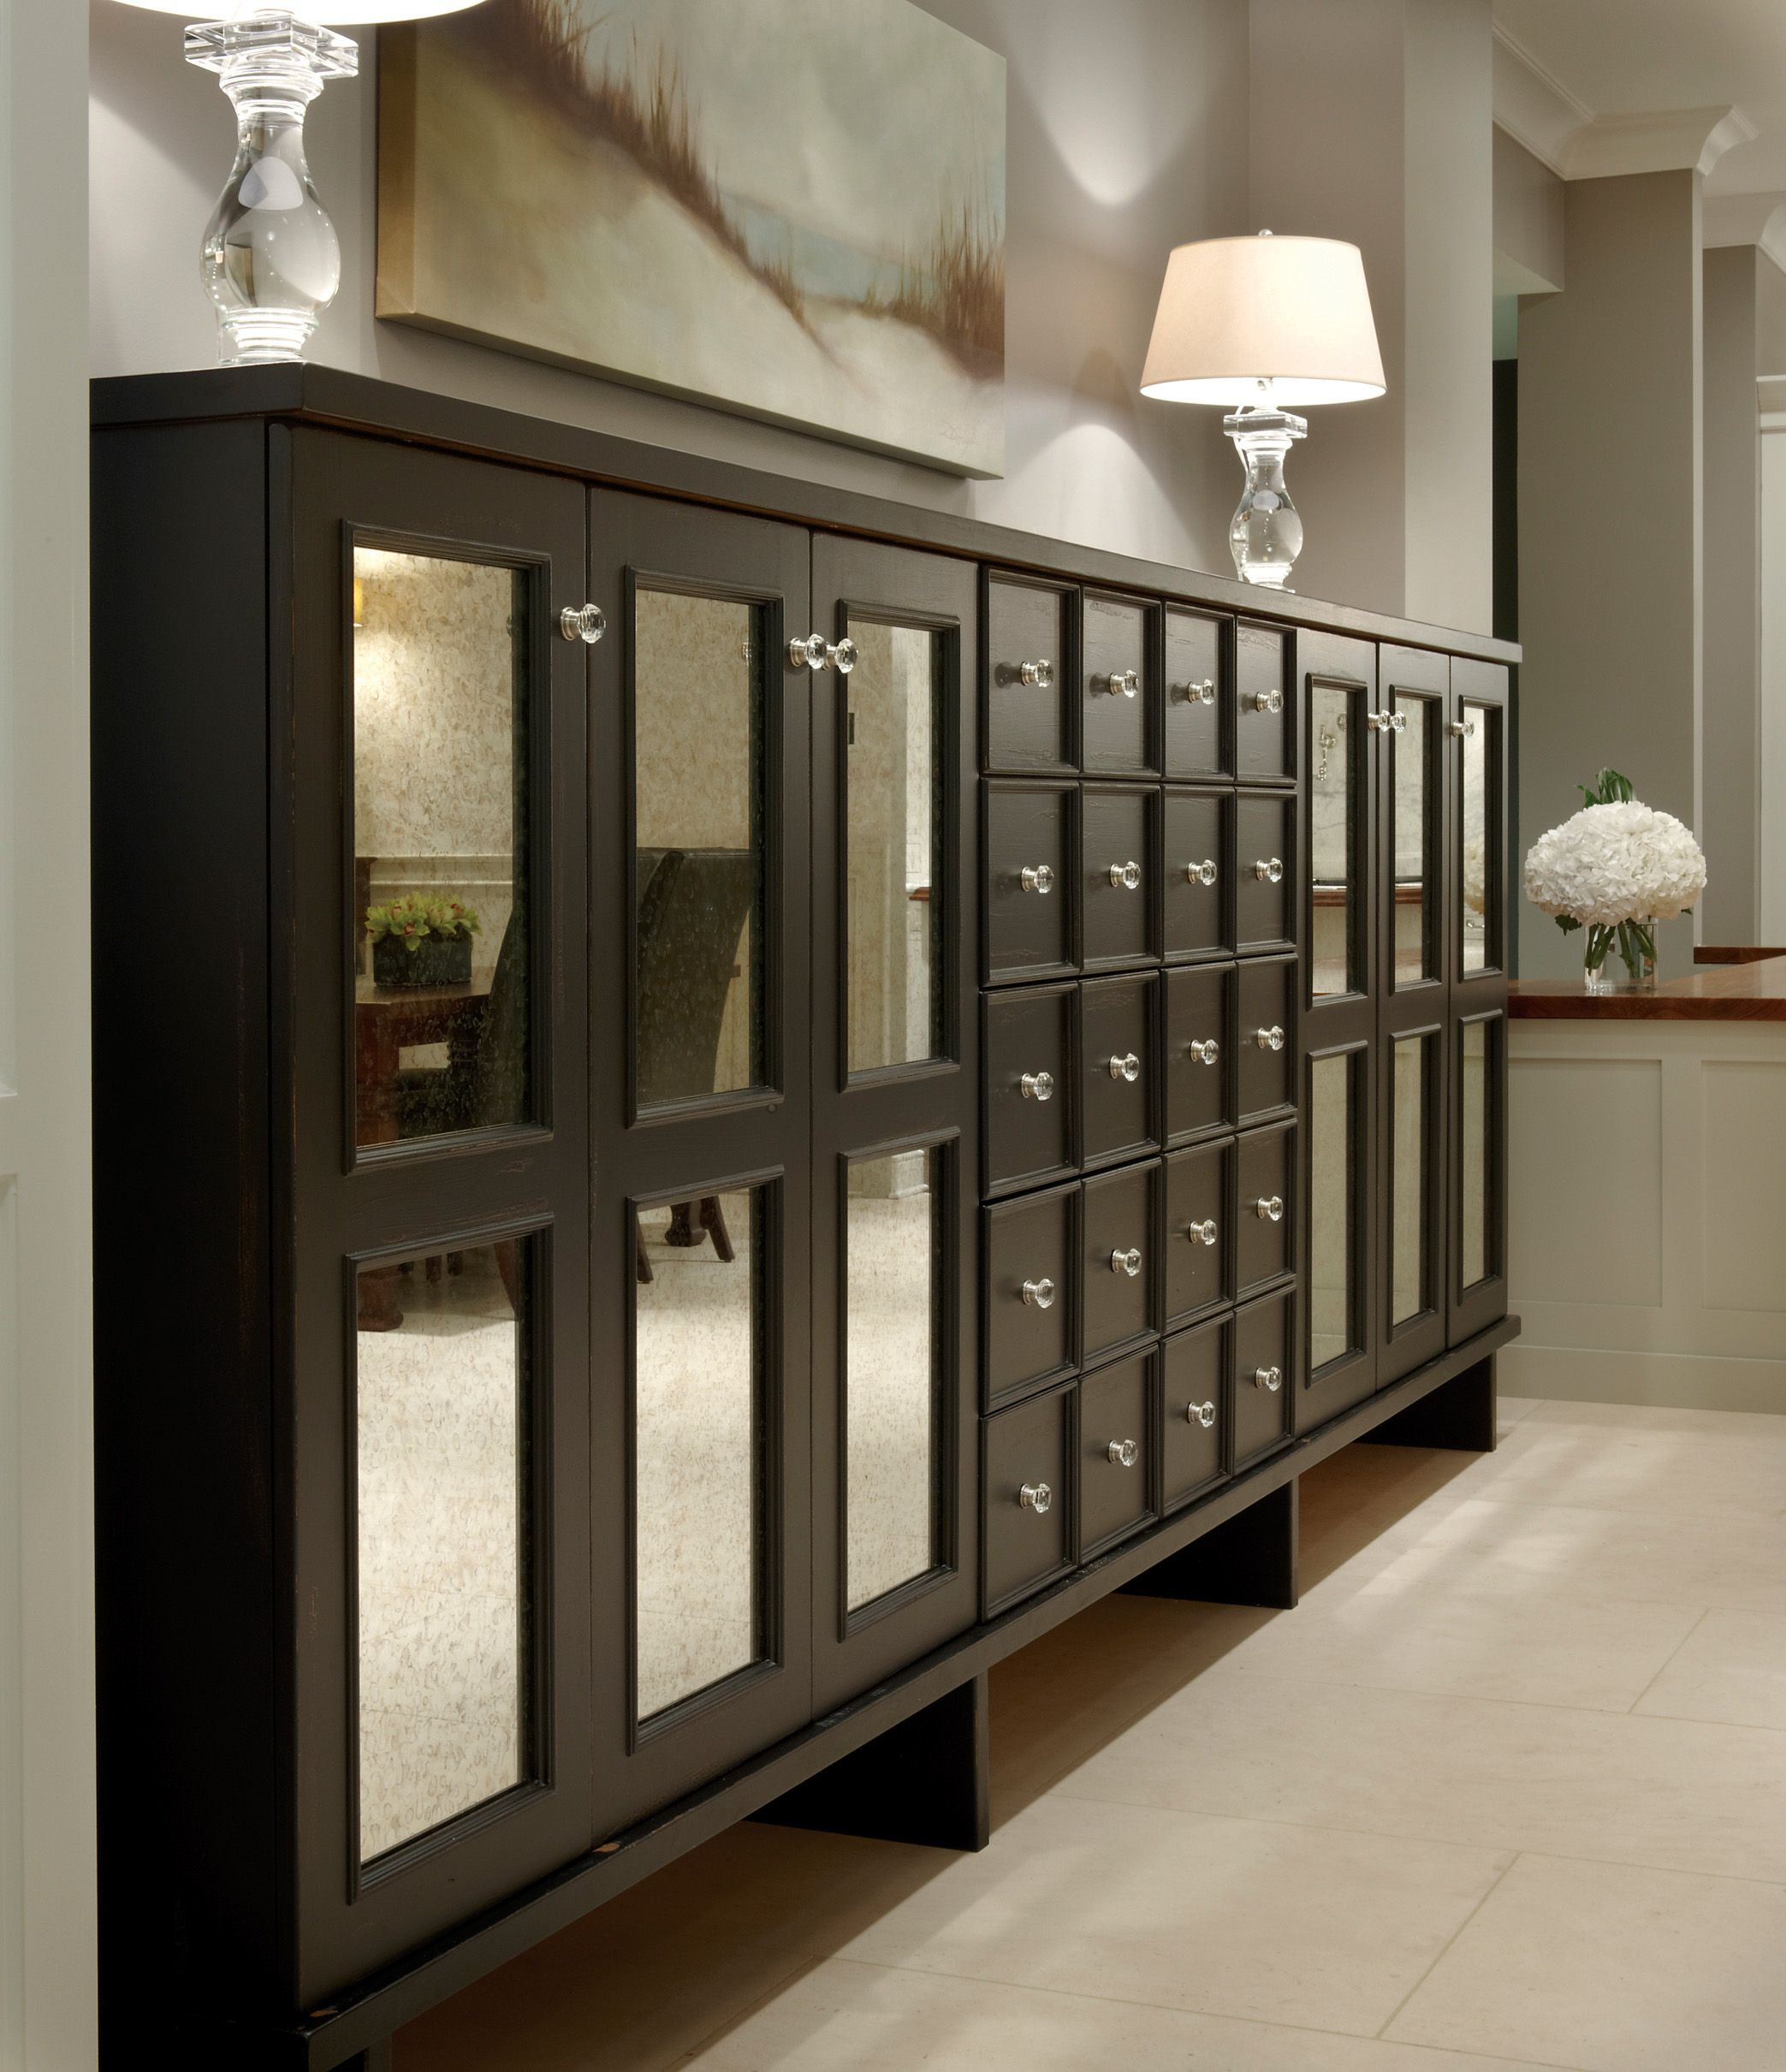 Built In Bedroom Cabinetry
 Best 25 Bedroom cabinets ideas on Pinterest